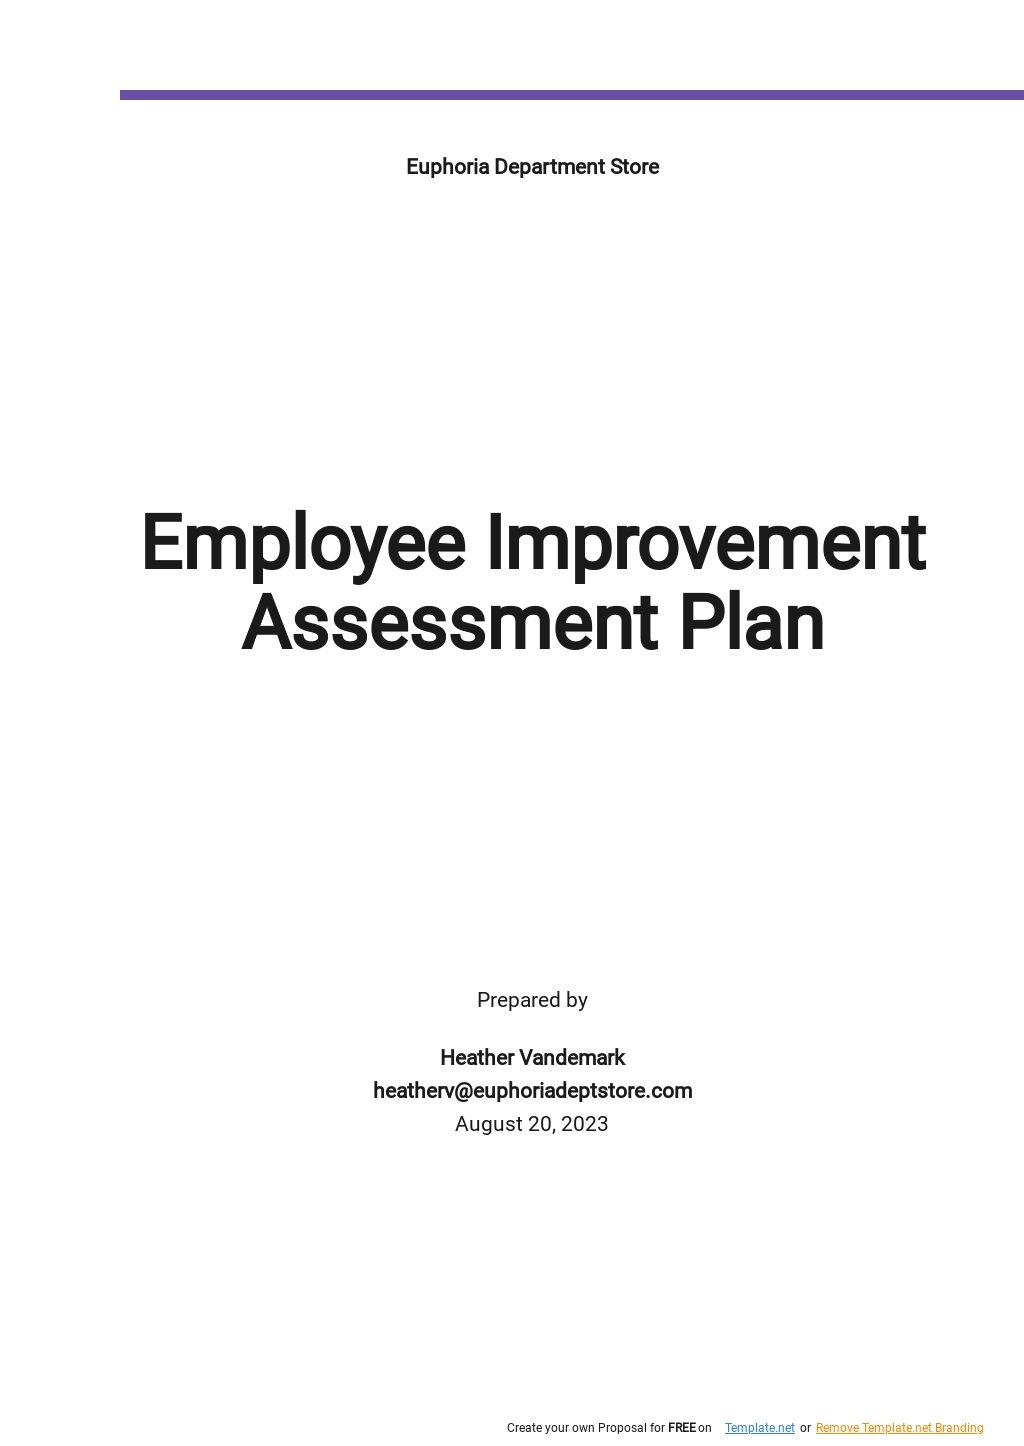 Sample Employee Improvement Plan Template.jpe